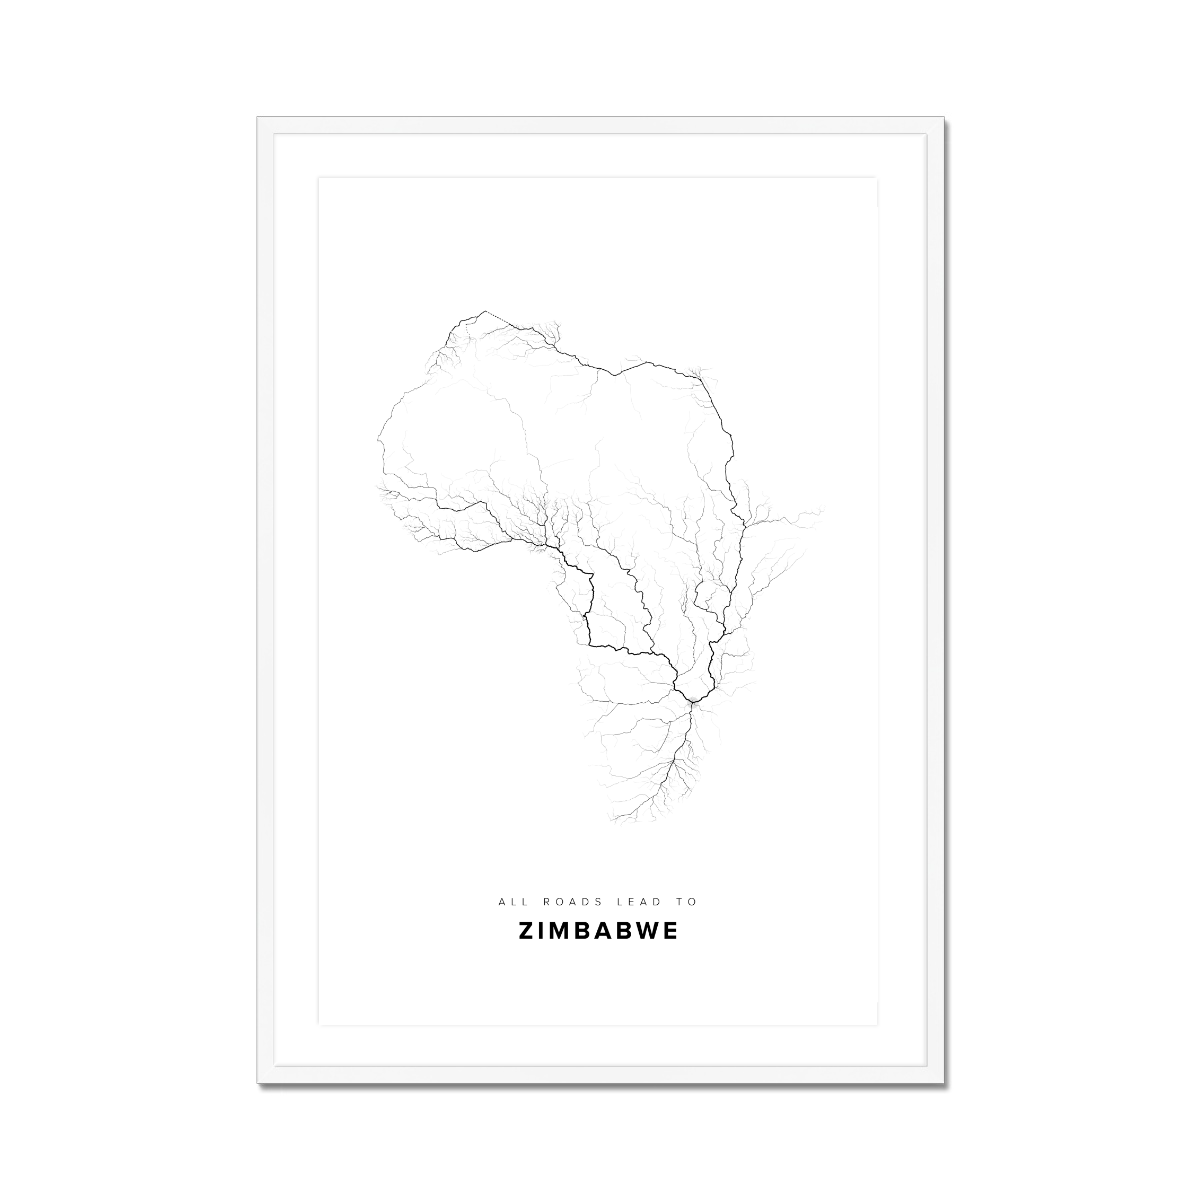 All roads lead to Zimbabwe Fine Art Map Print